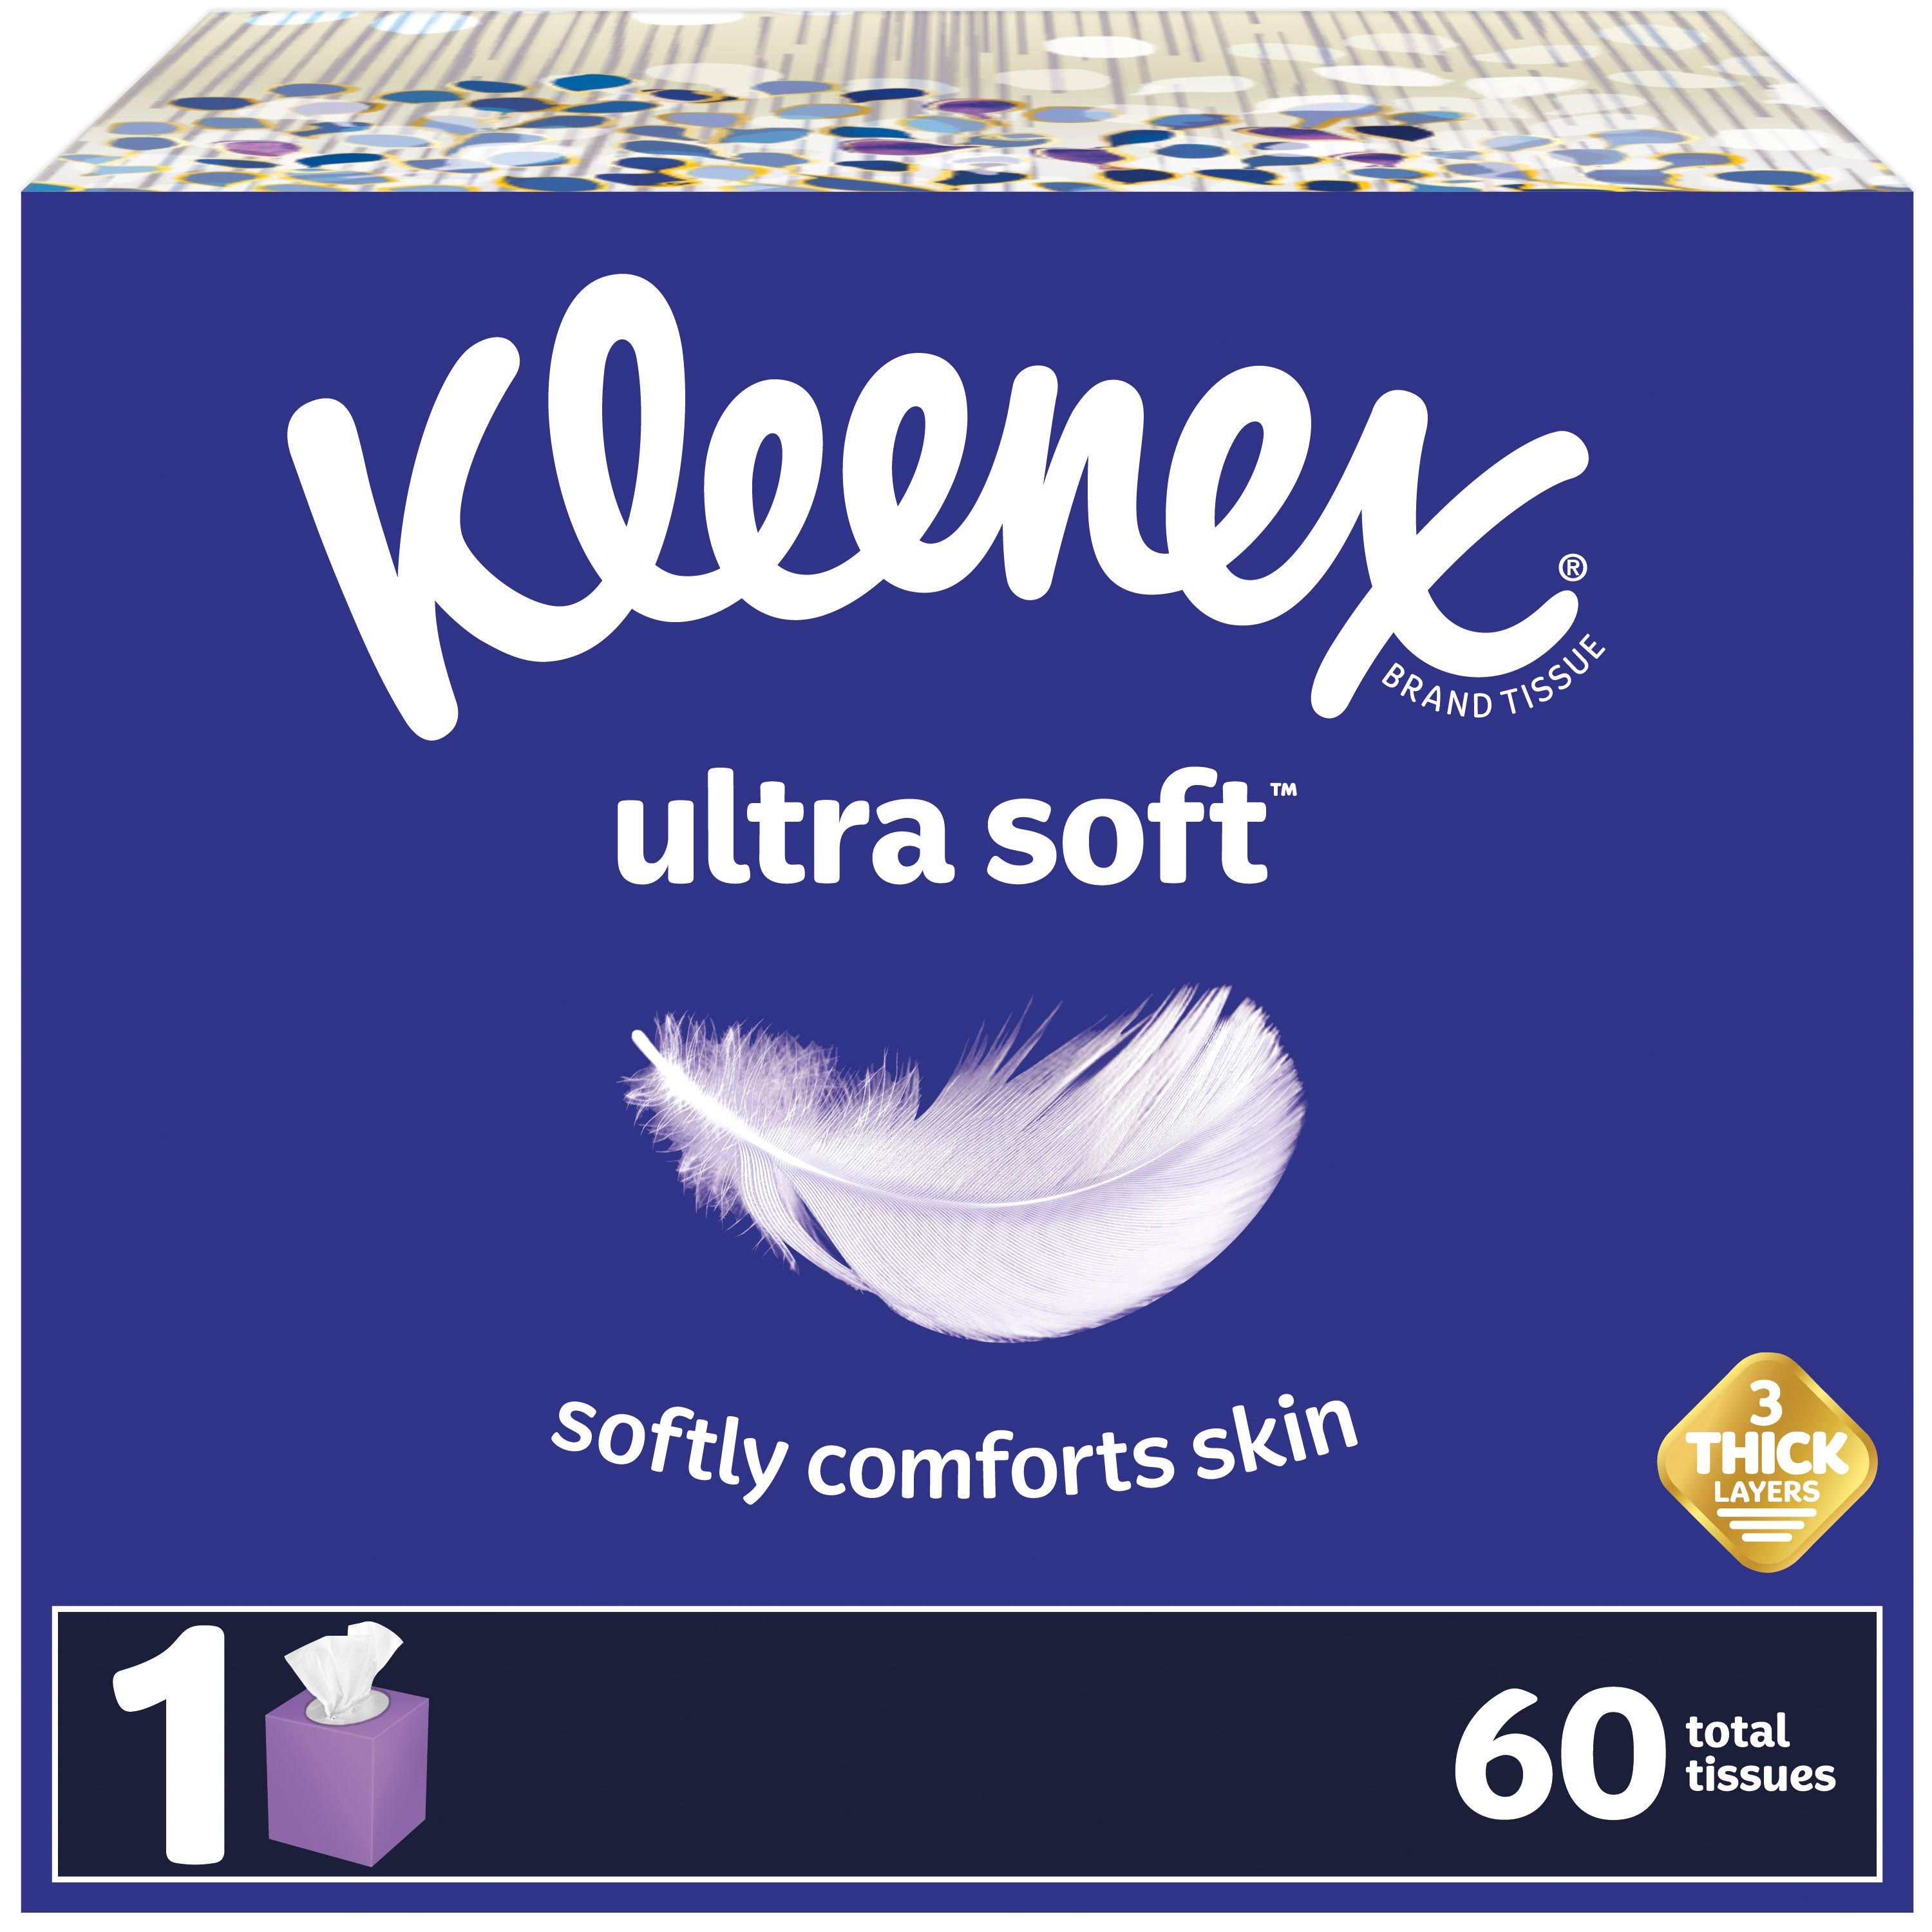 Kleenex Tissues, Ultra Soft, 3-Ply - 60 tissues